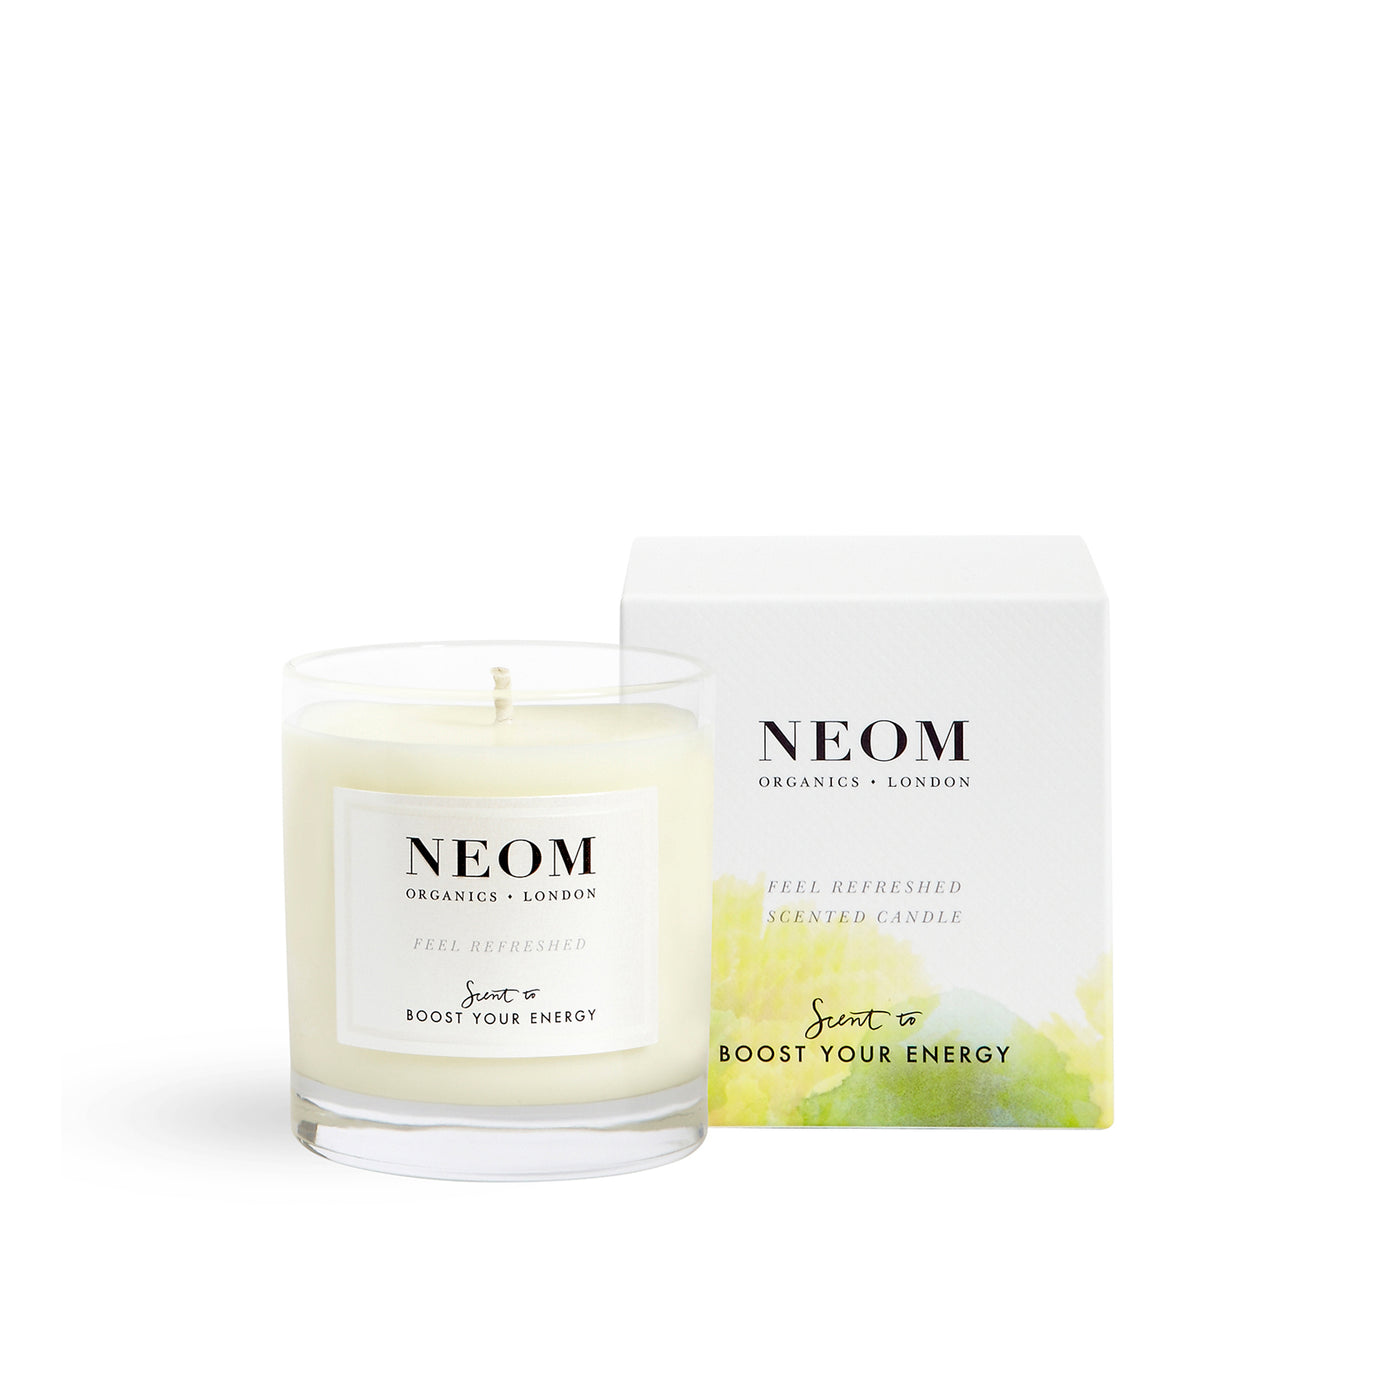 NEOM Organics - Feel Refreshed Candle 1 Wick